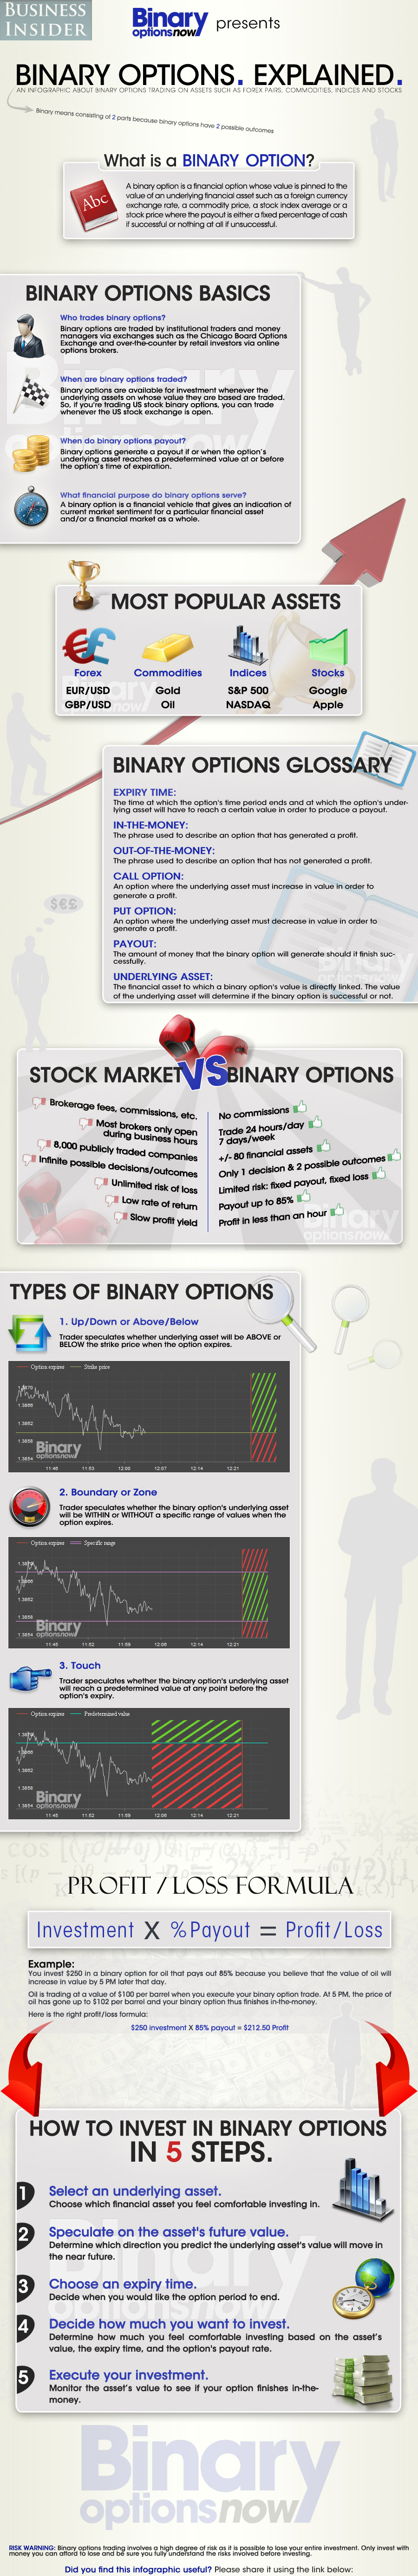 Binary option company profile